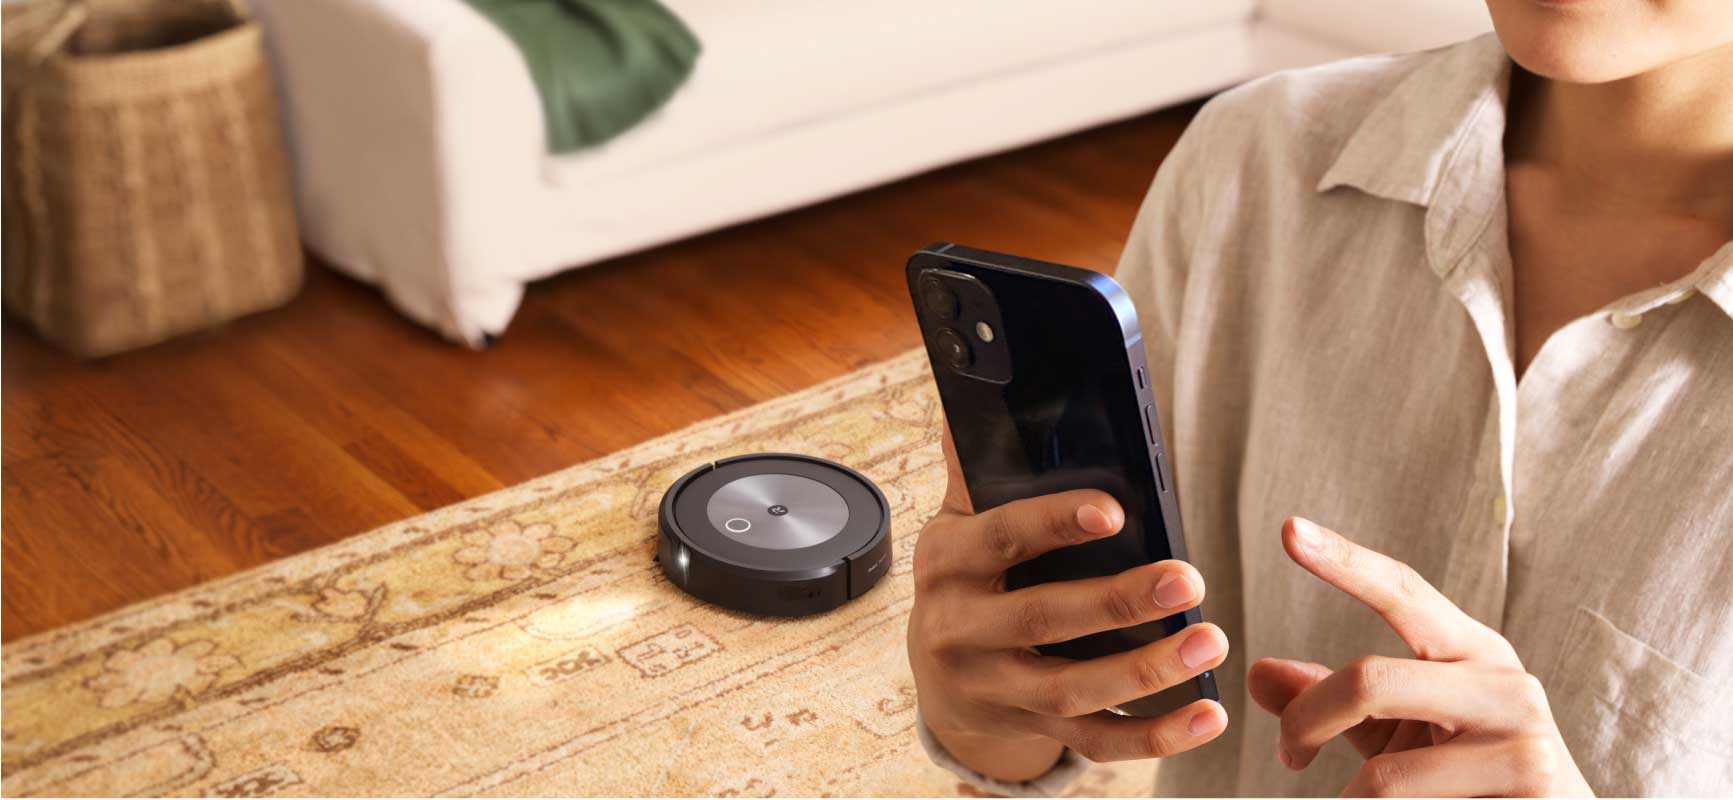 iRobot Roomba s9 personalizowane sugestie sprzątania